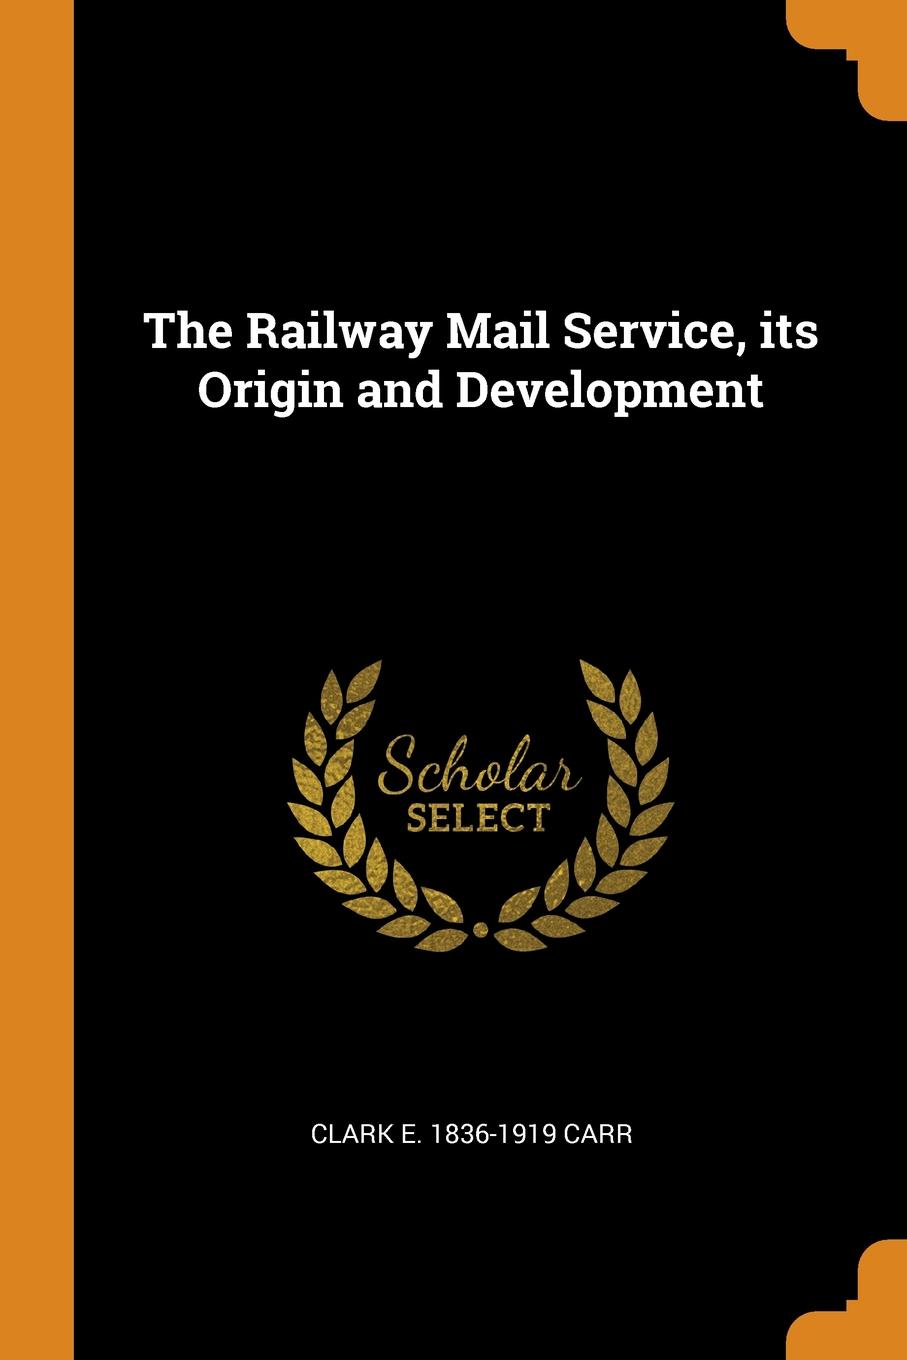 The Railway Mail Service, its Origin and Development